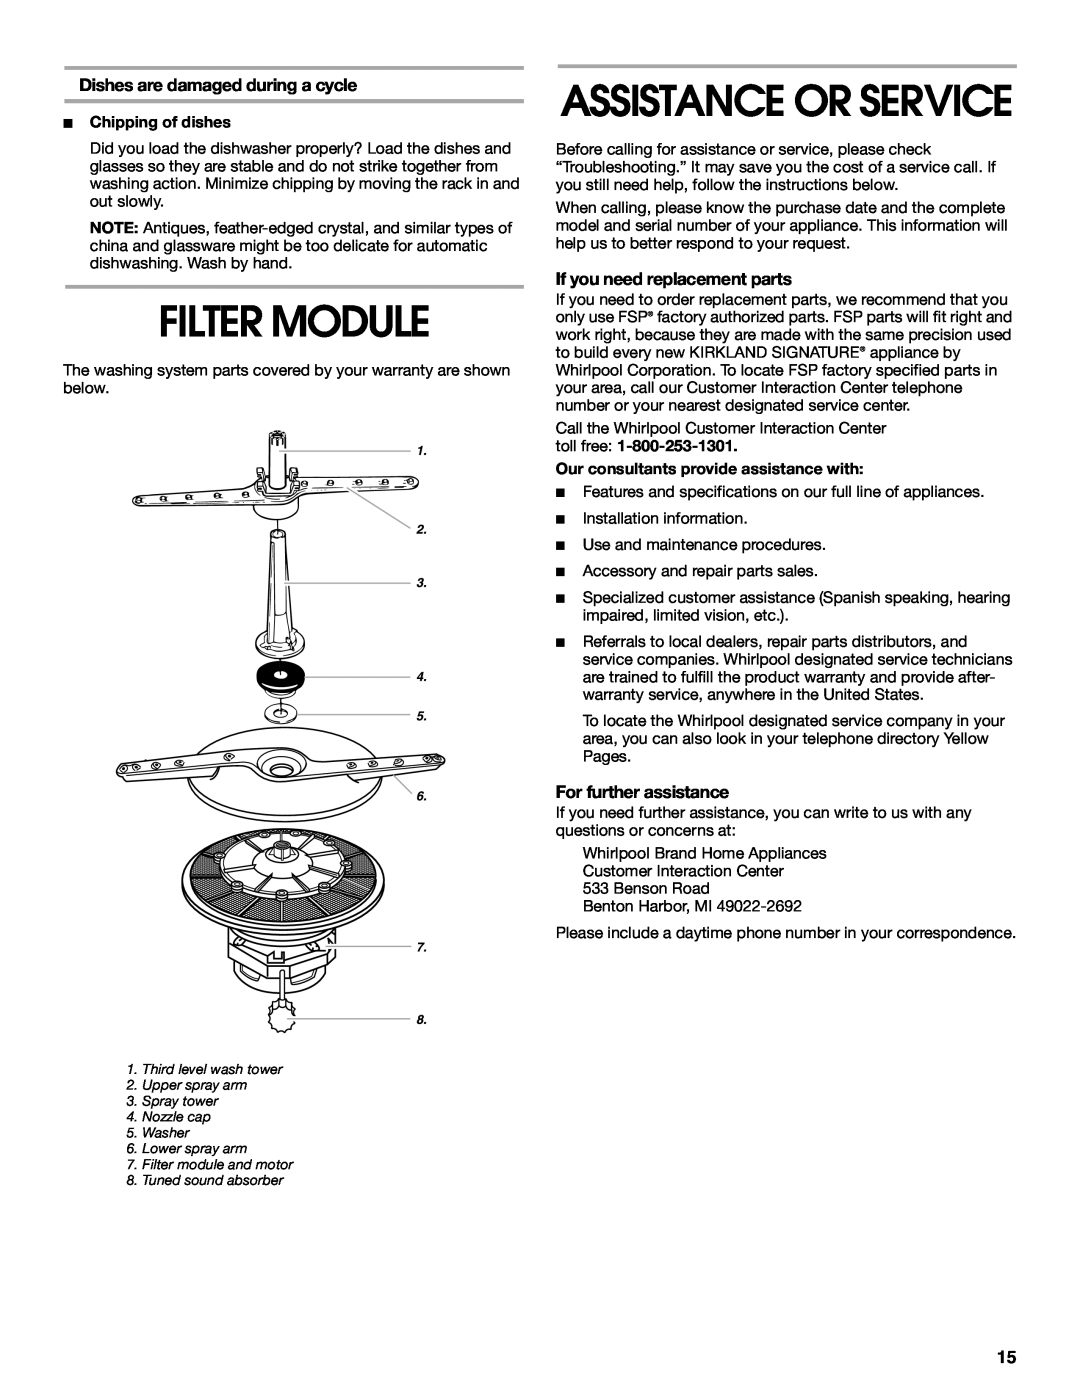 Whirlpool SUD5000 manual Filter Module, Assistance Or Service 